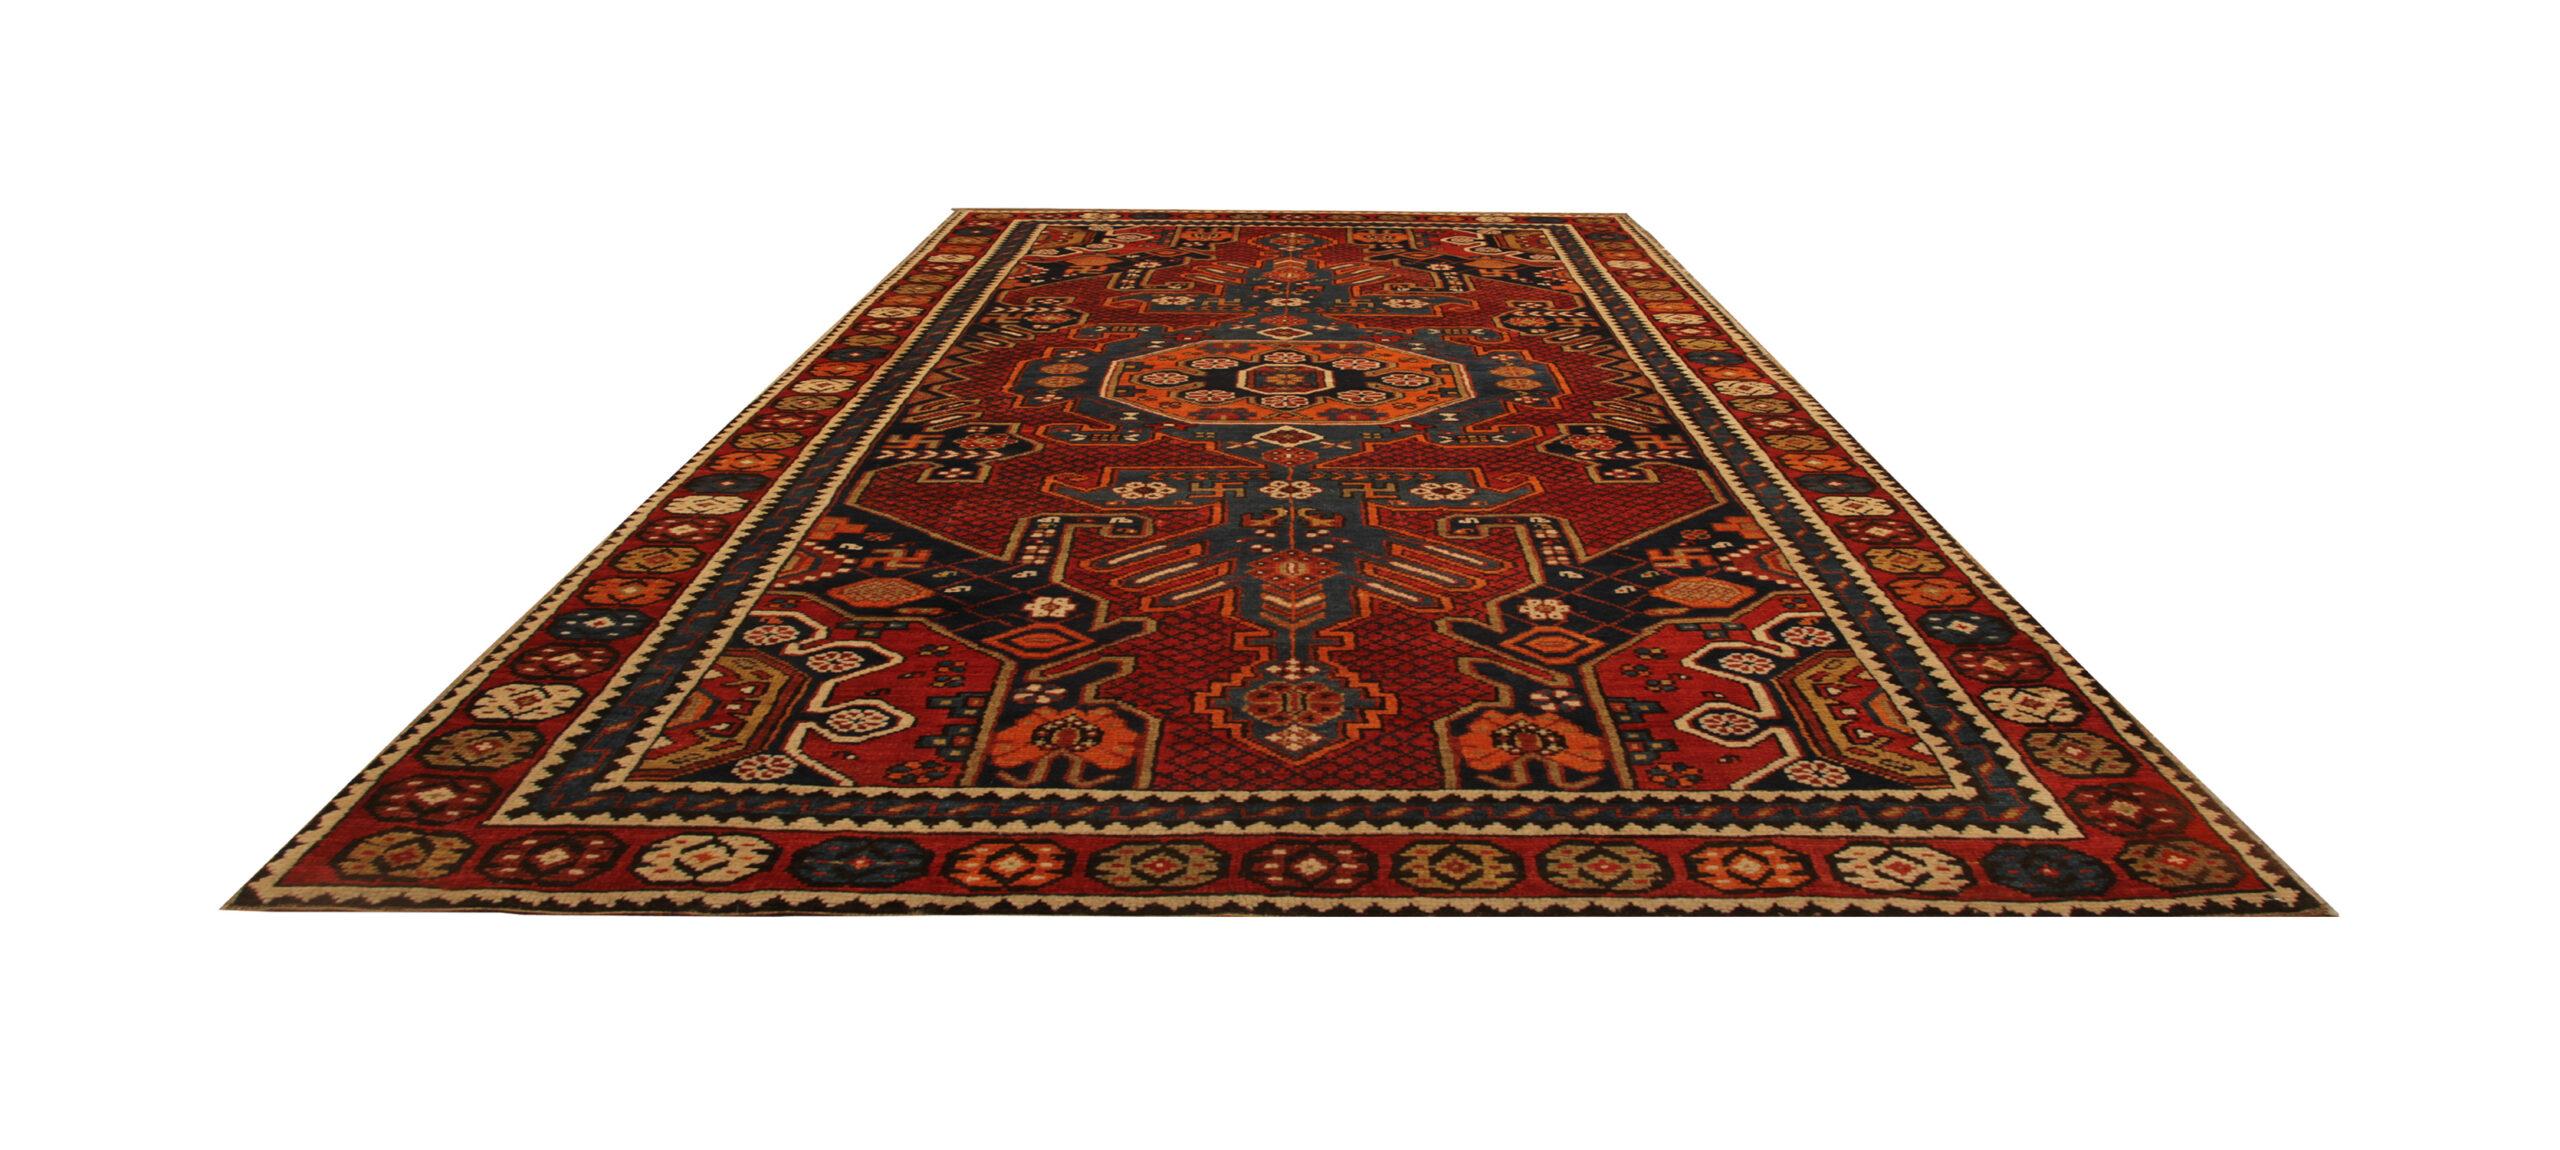 Hand-Knotted Rare Antique Rug Kazak Caucasian Red Medallion Rug Handmade Carpet of kuba Area For Sale